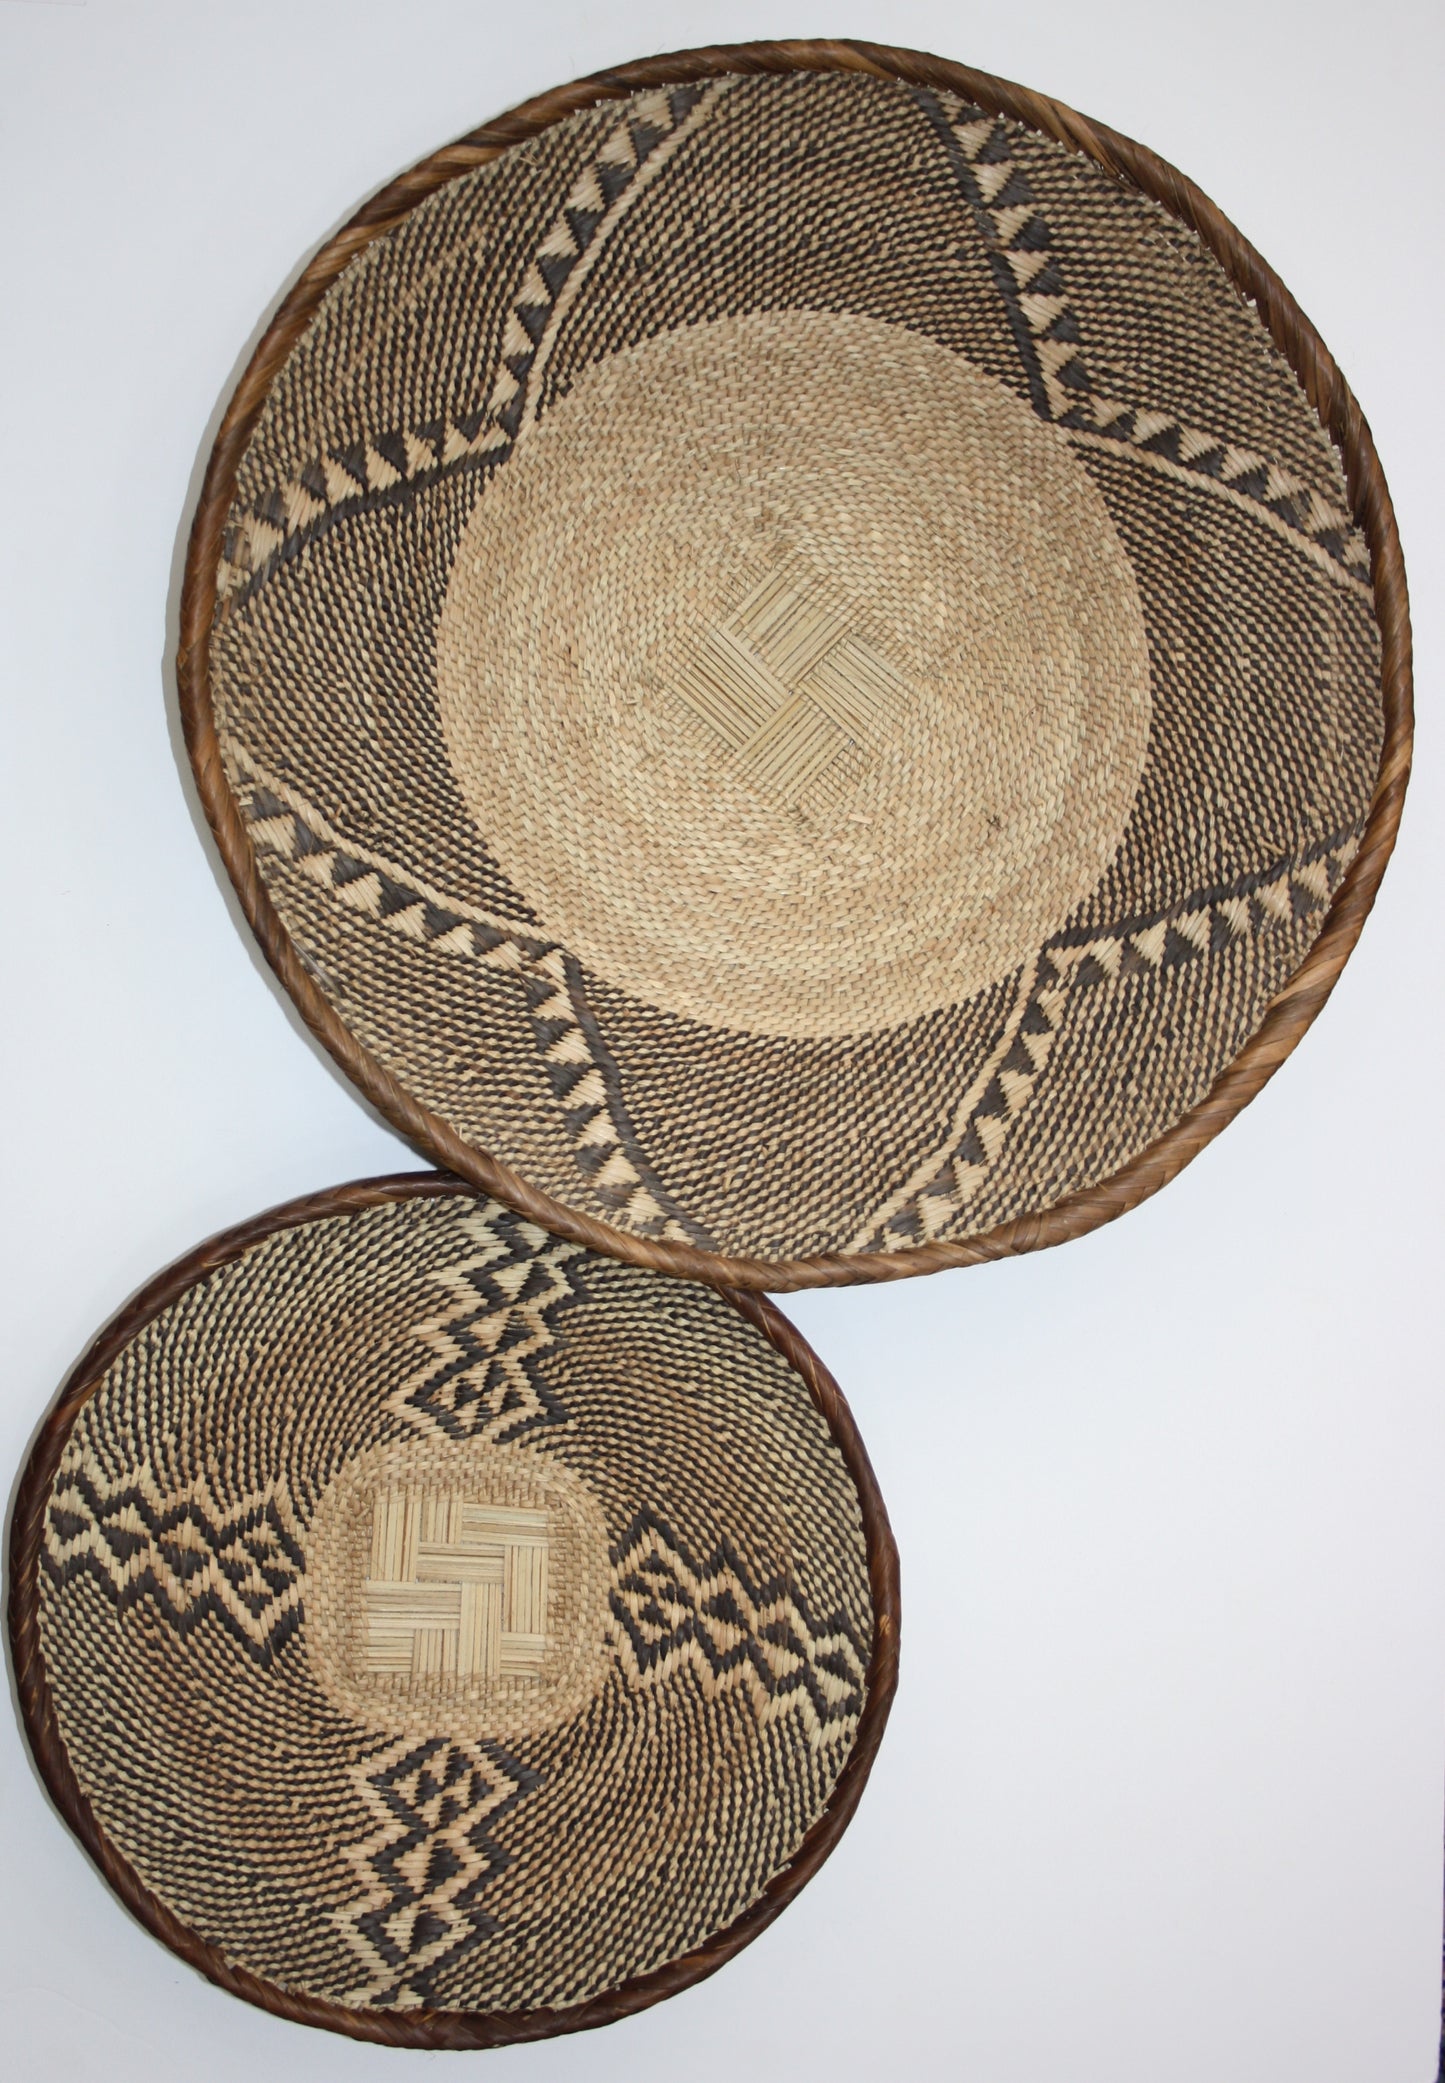 Tonga Baskets